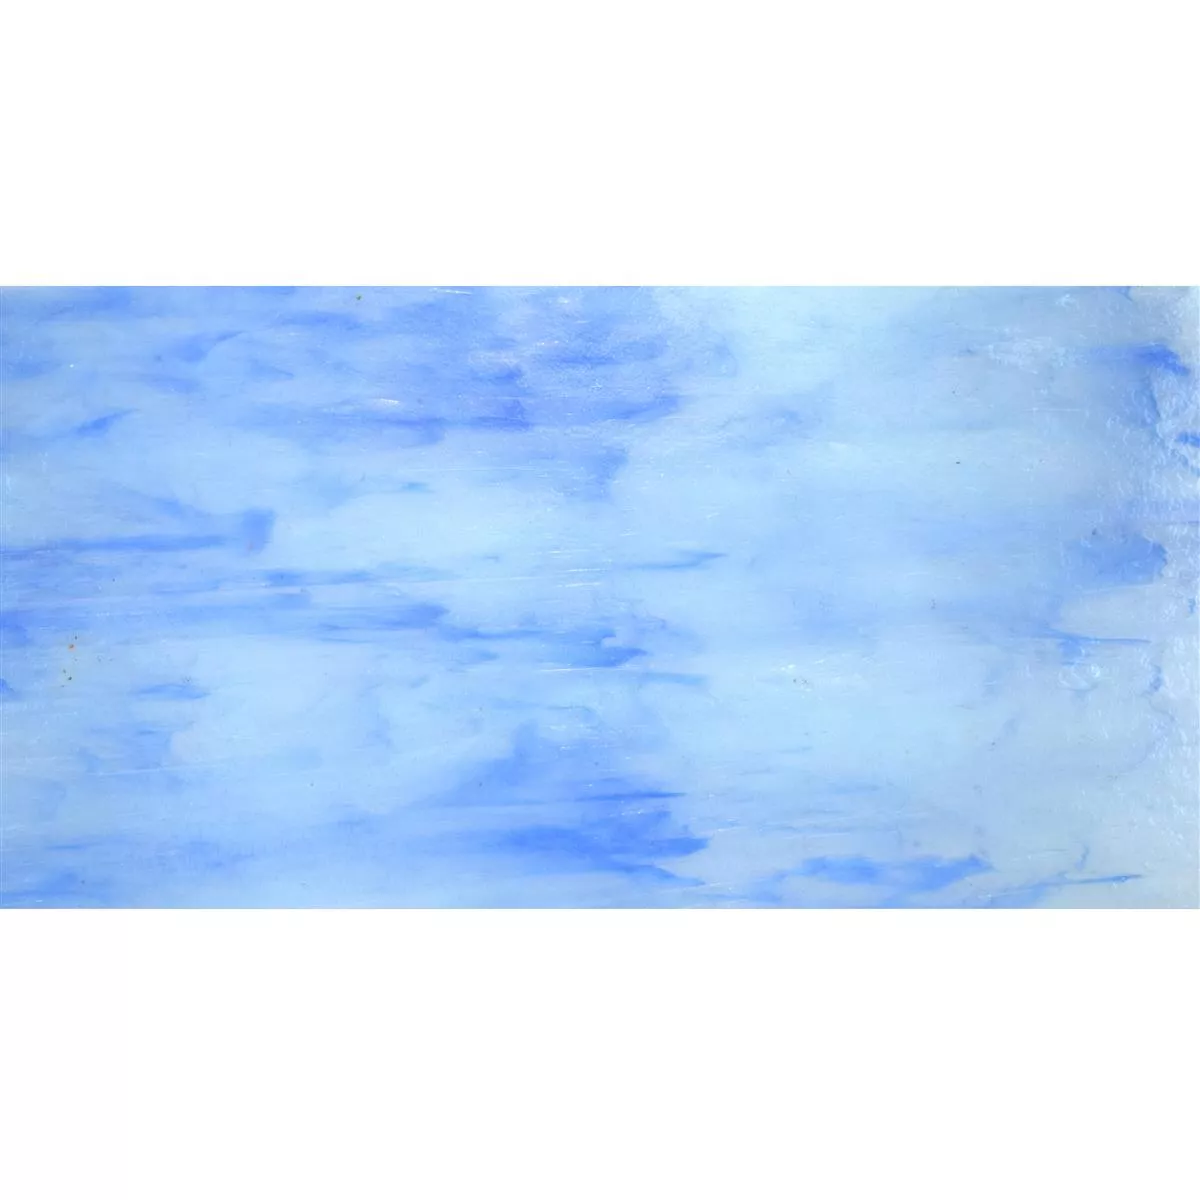 Staklo Zidne Pločice Trend-Vi Supreme Sky Blue 30x60cm